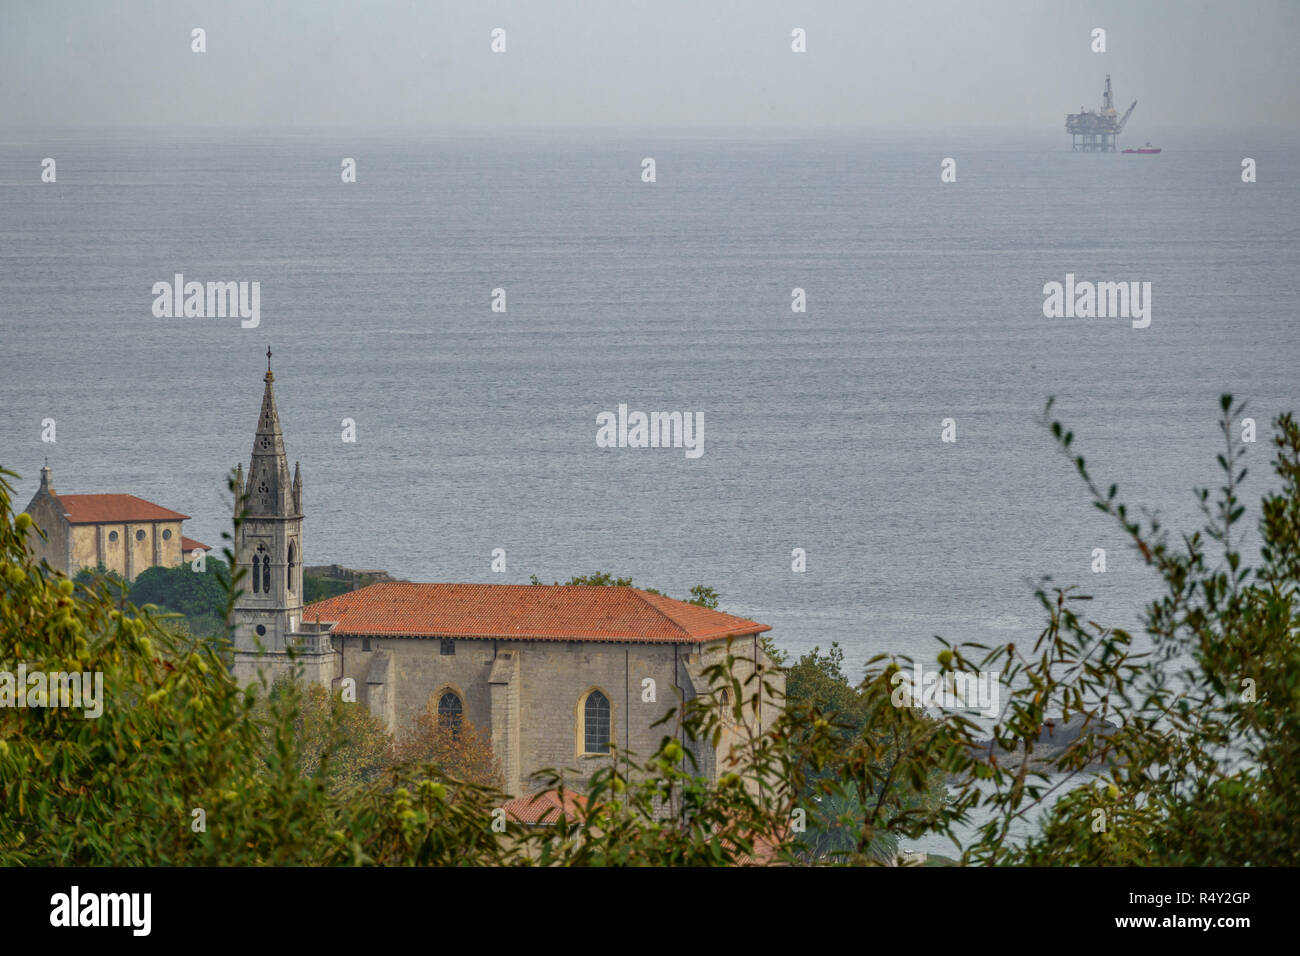 Mundaka iglesia con gas de la plataforma oceánica en el horizonte Foto de stock